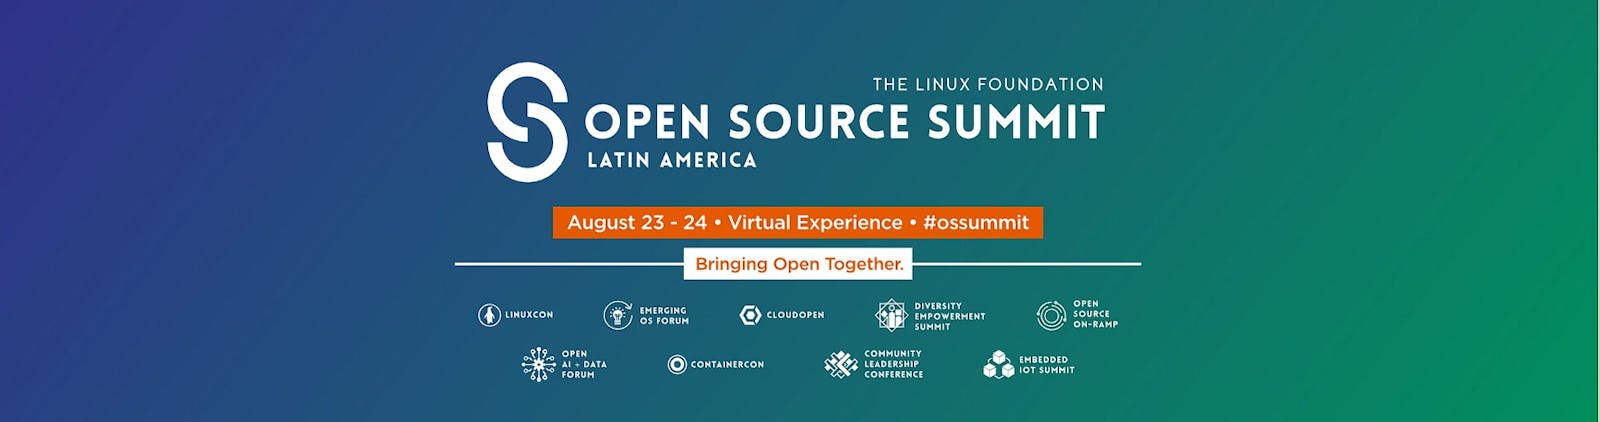 My Open Source Summit Latin America 2022 Experience